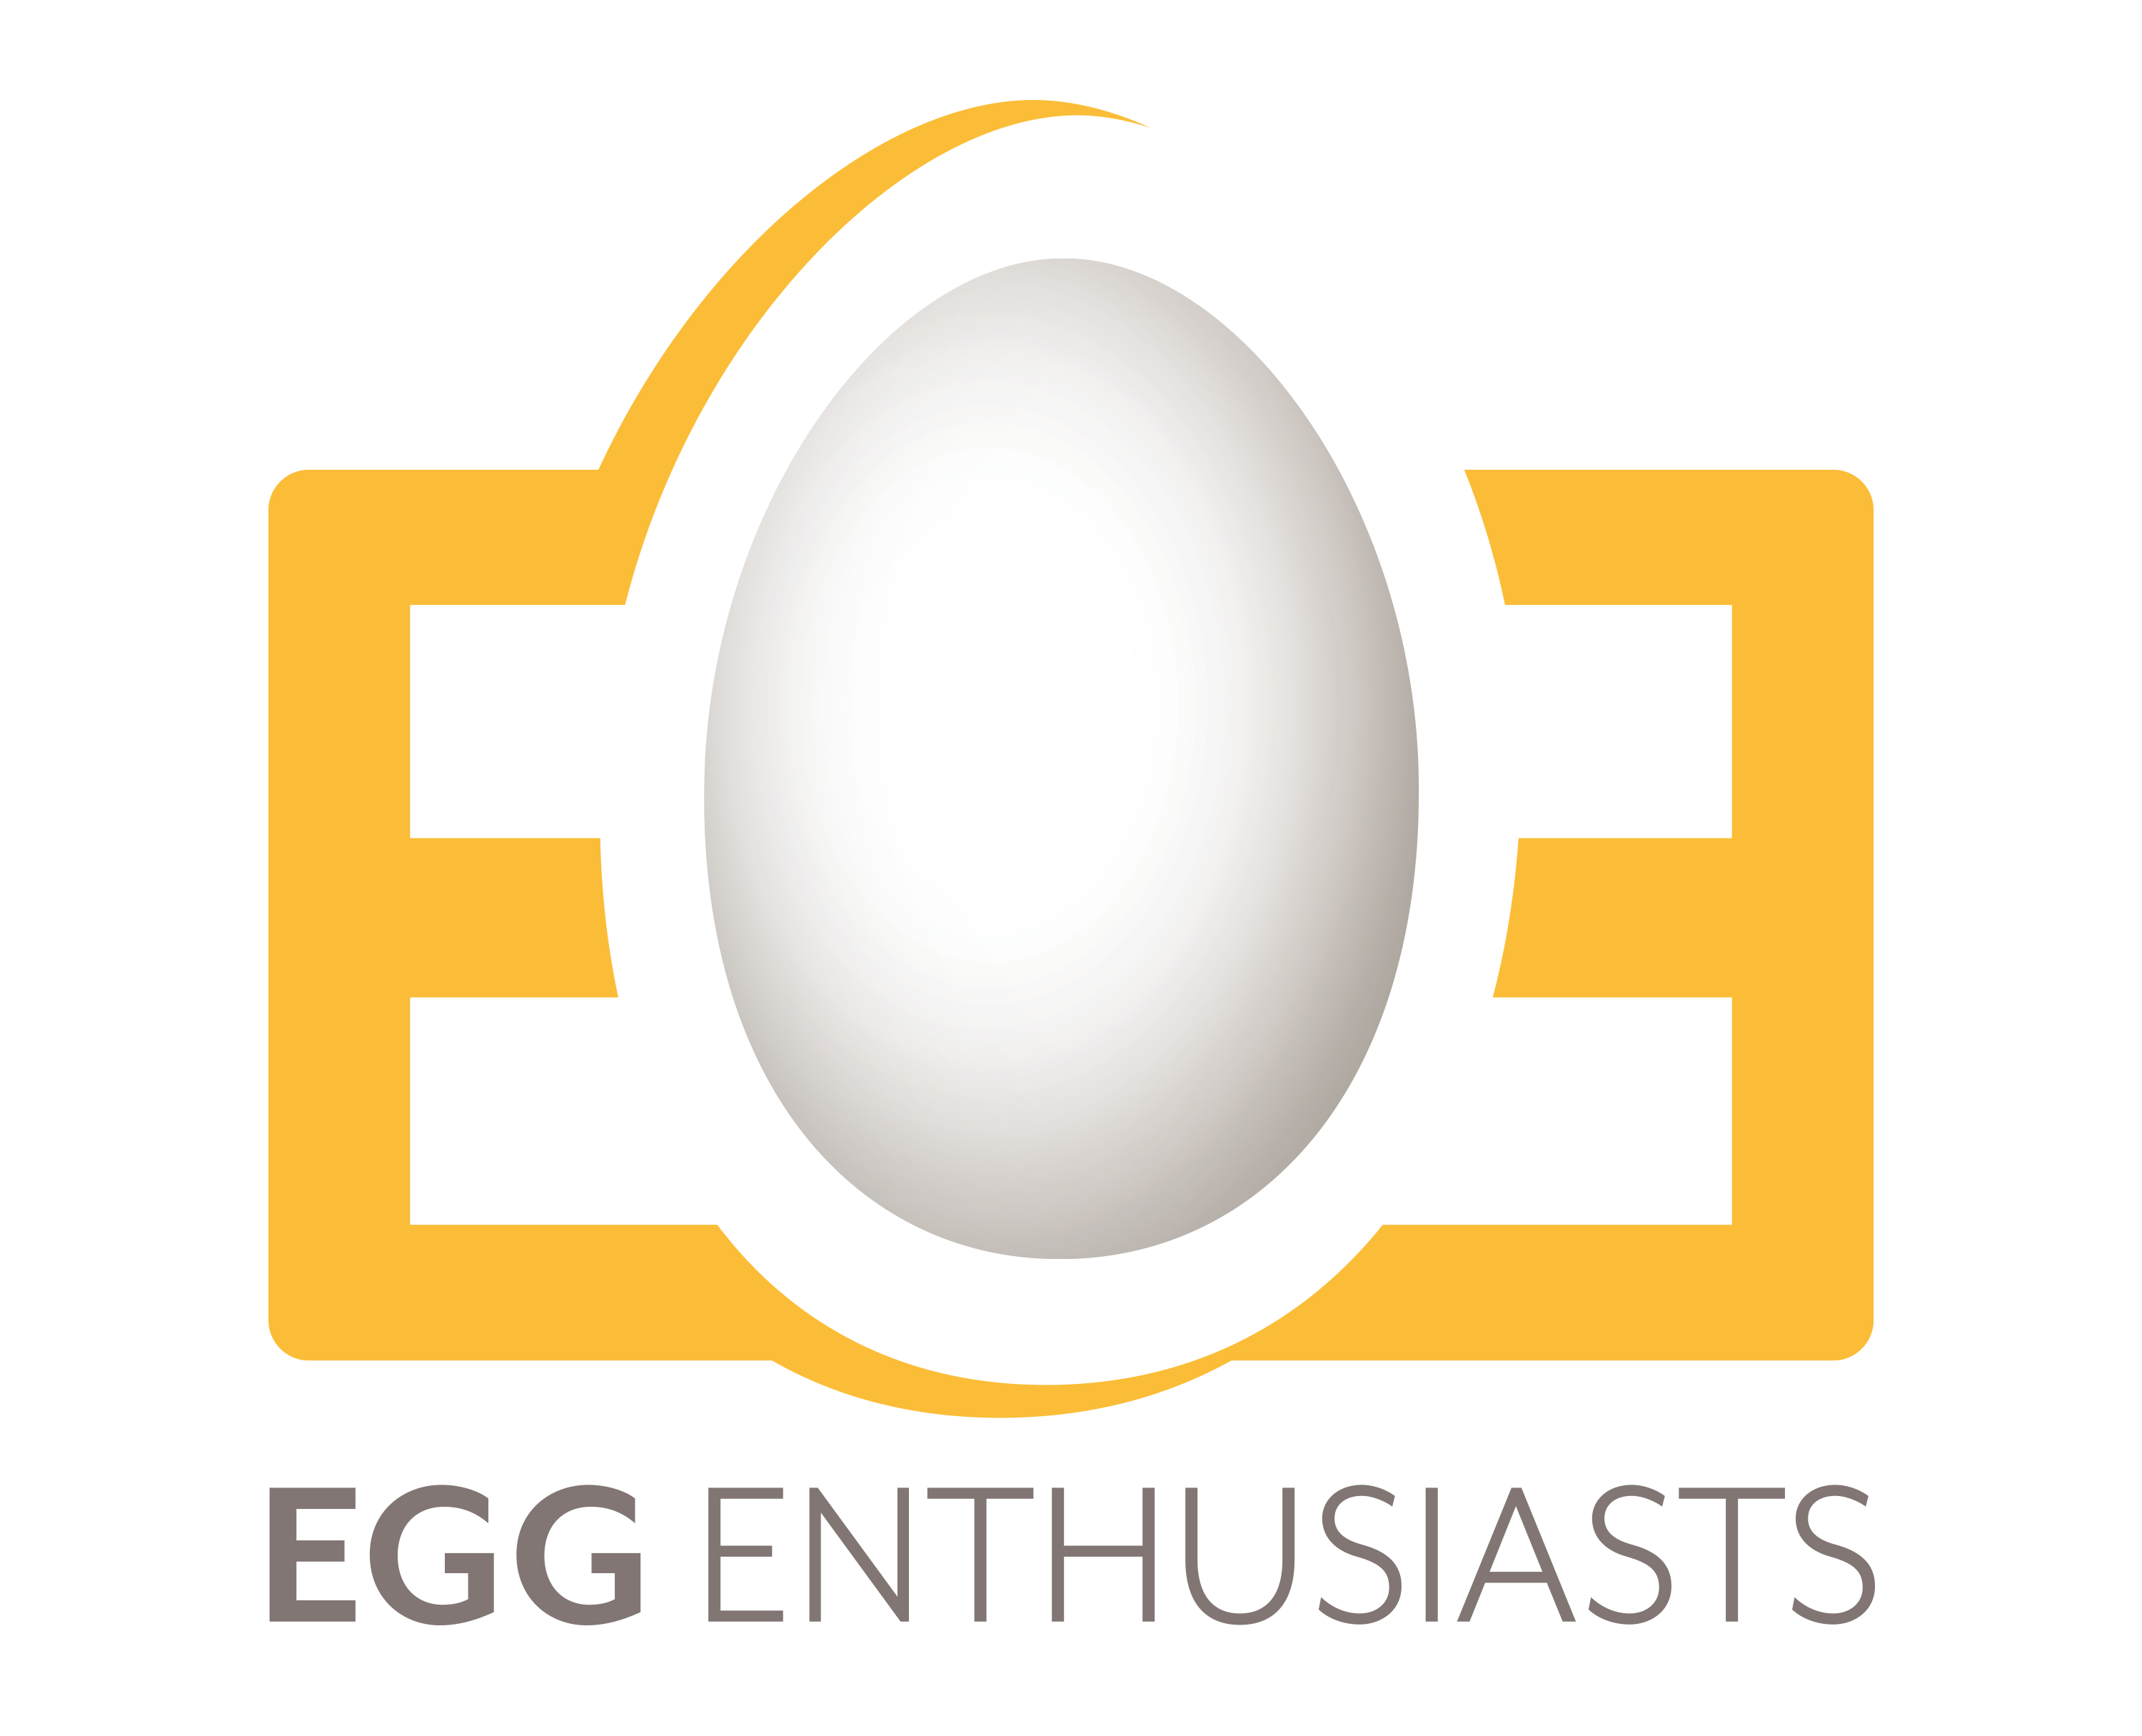 Egg Enthusiasts